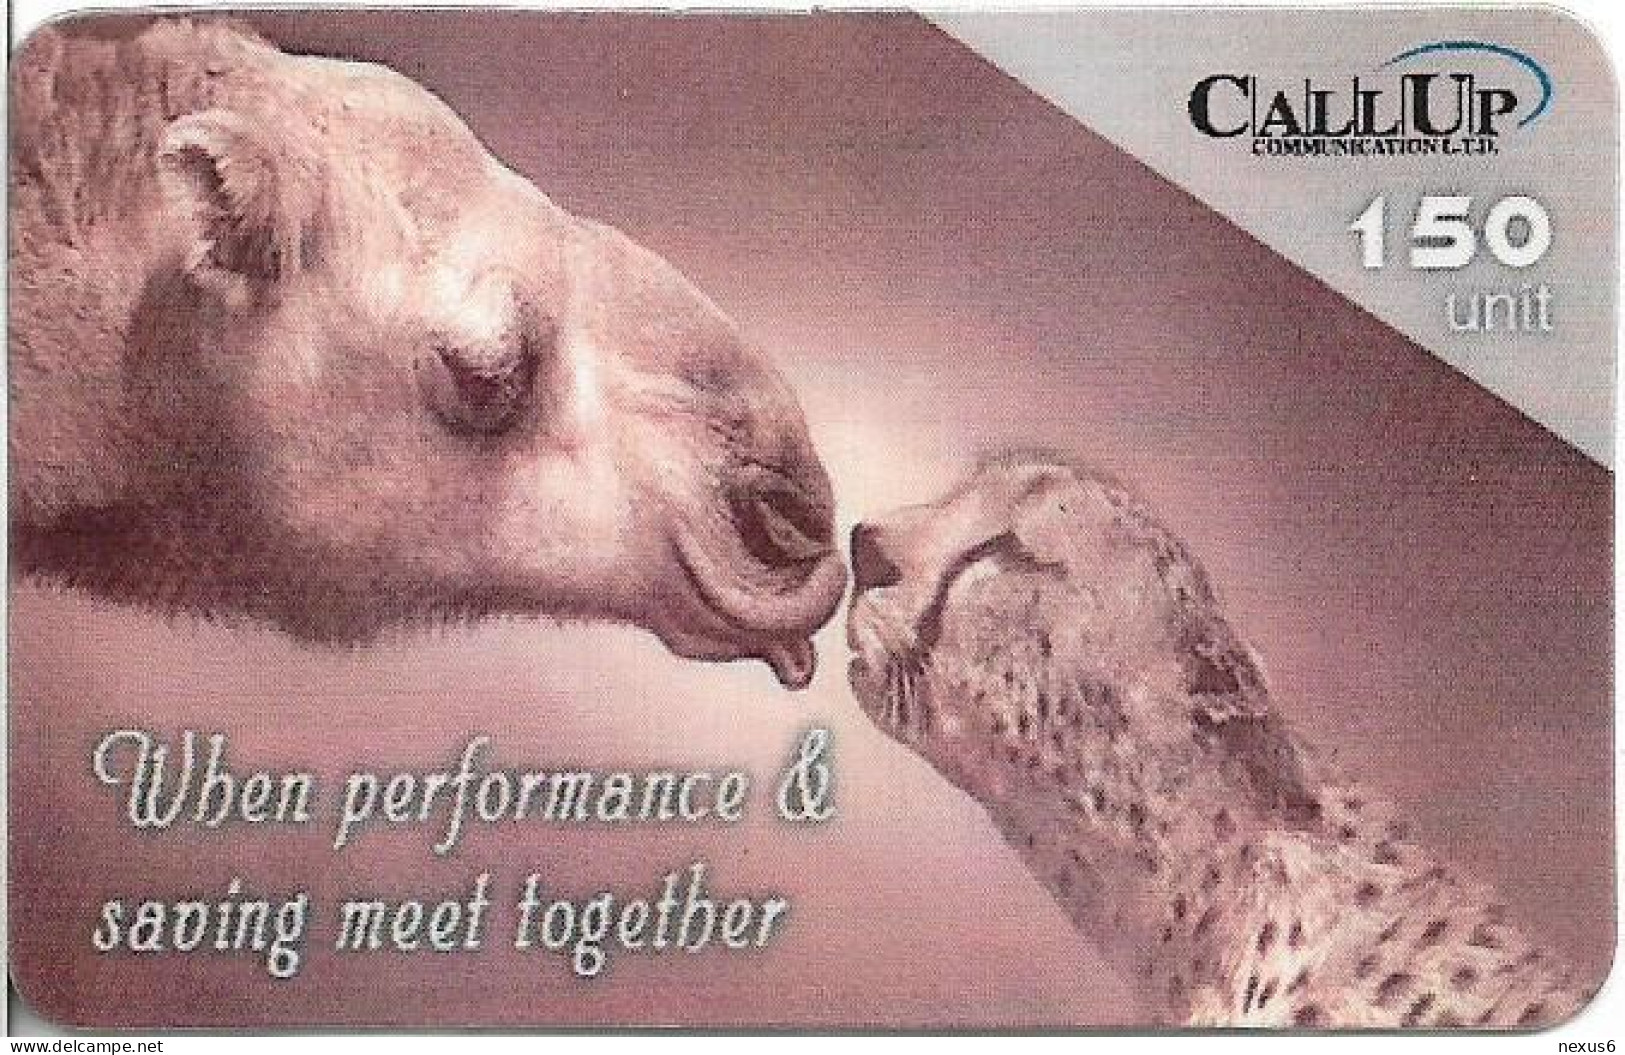 Israel - CallUp Commun. Ltd - Cheetah & Camel, Exp.31.12.2001, Remote Mem. 150Units, Used - Israel